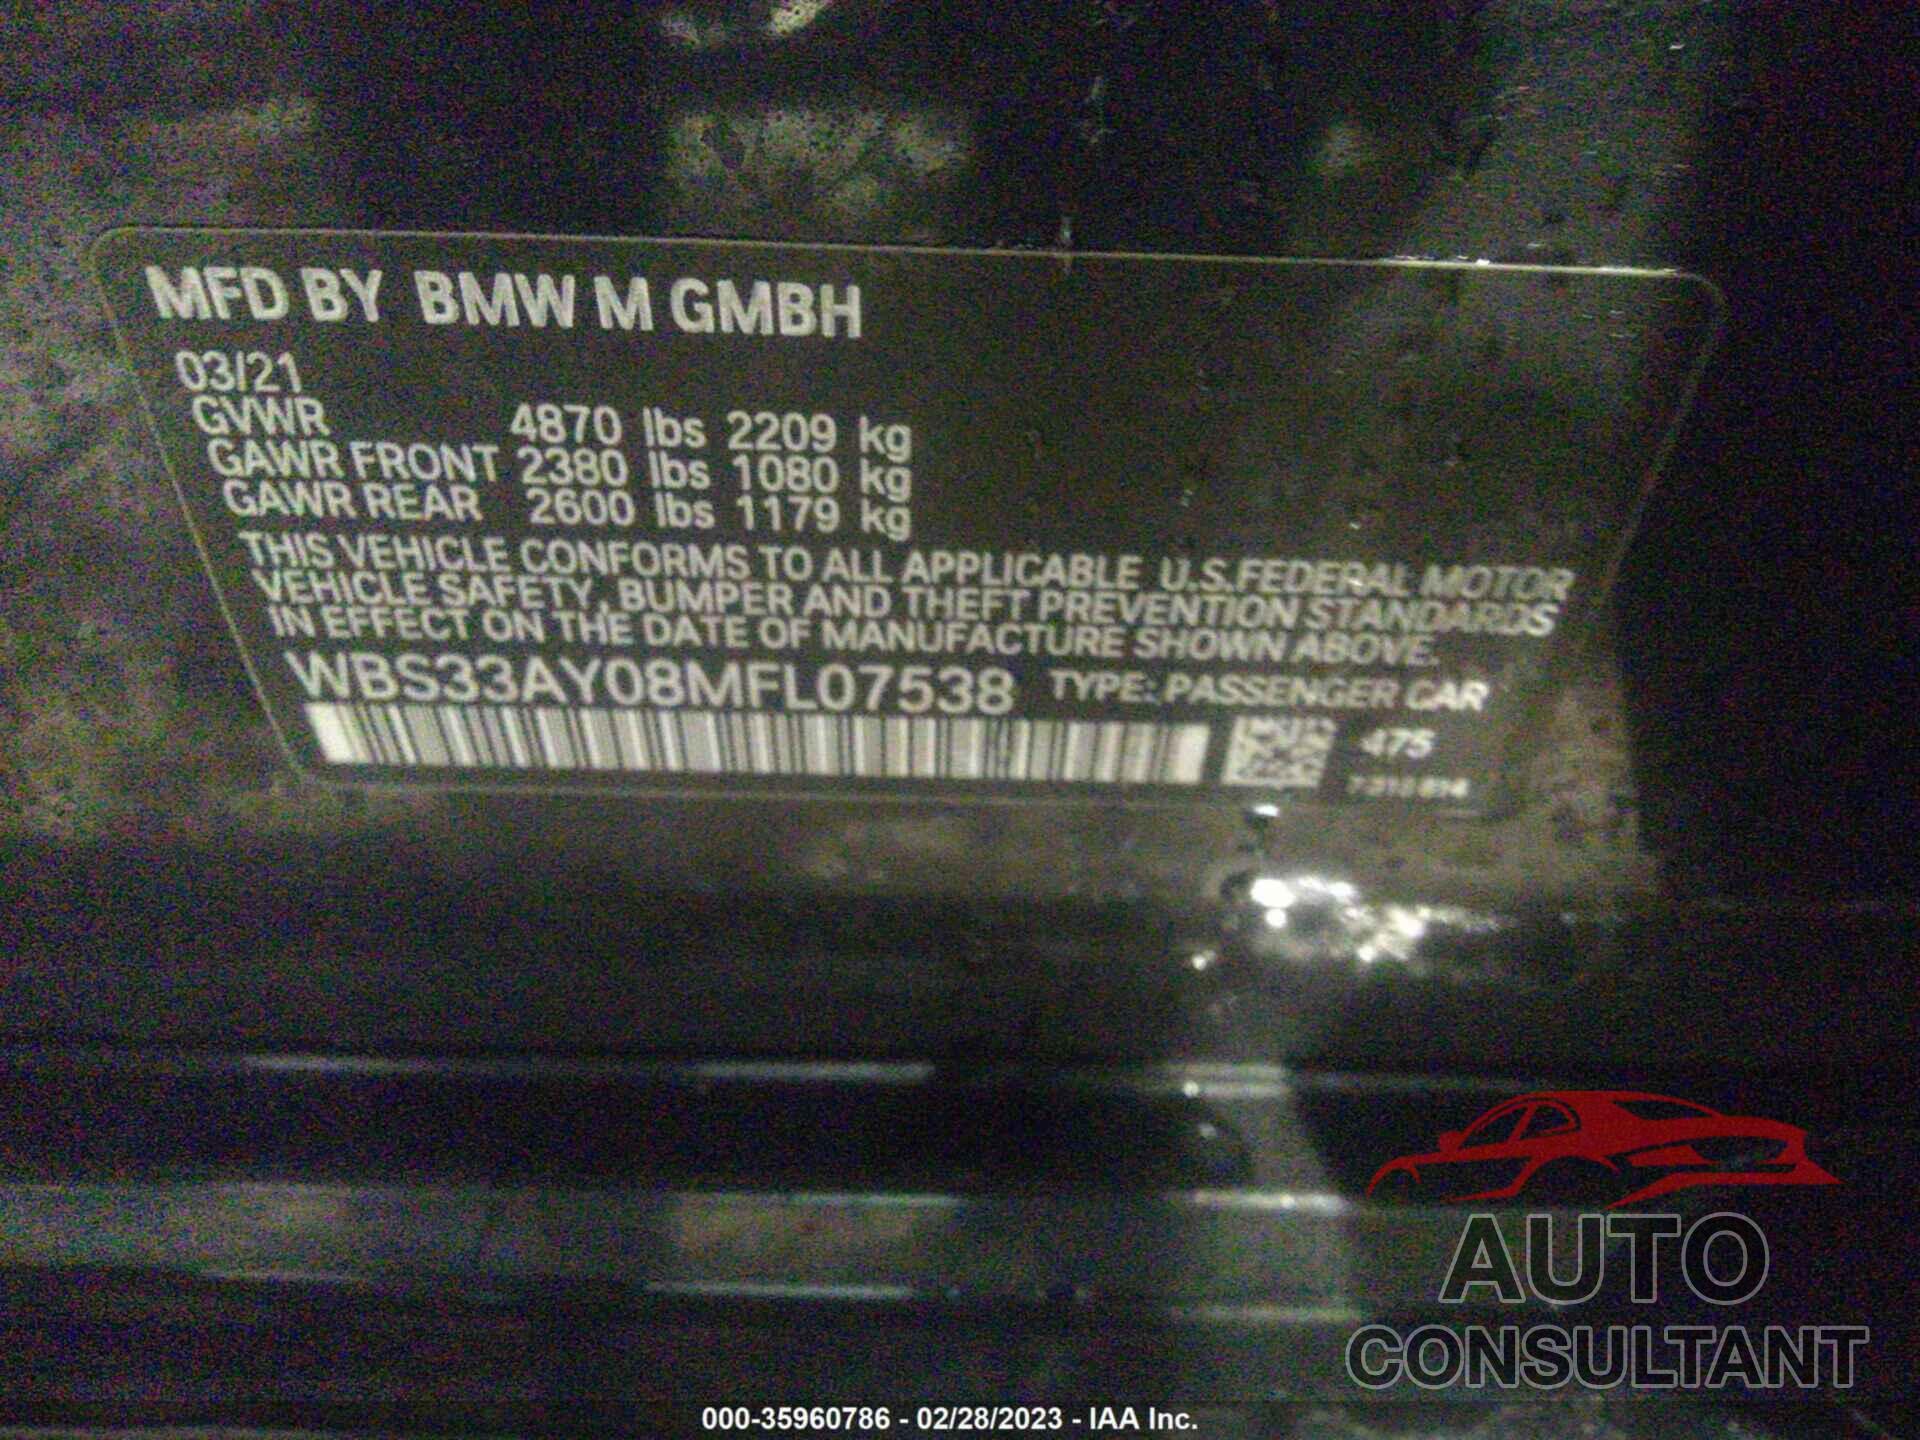 BMW M3 2021 - WBS33AY08MFL07538